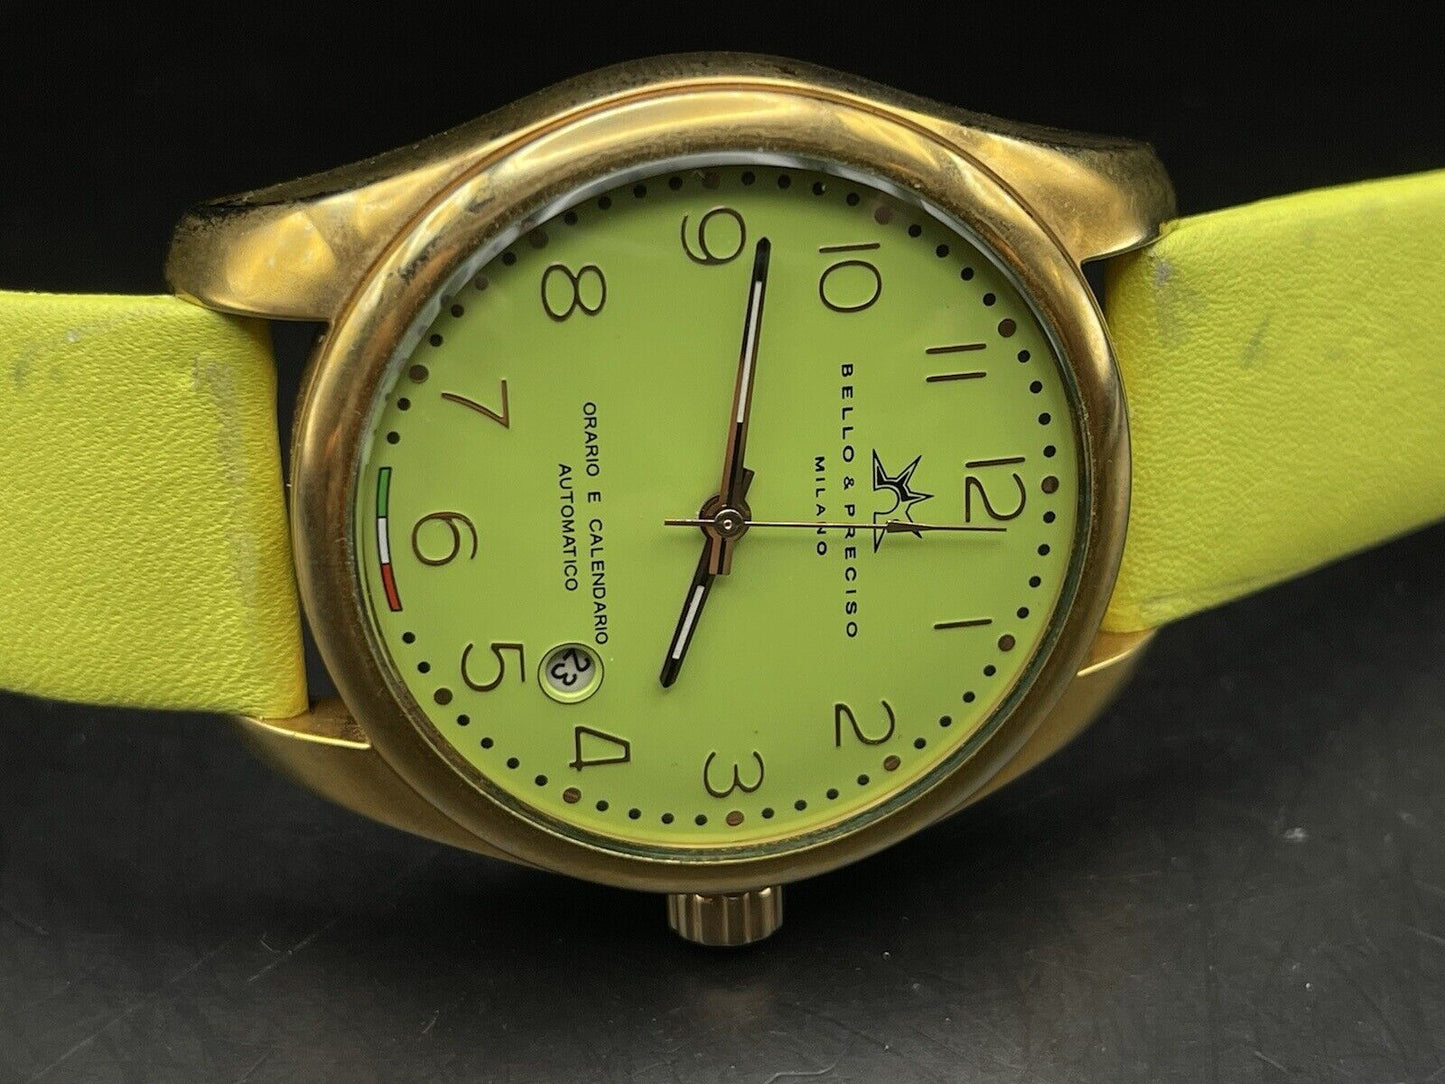 Bello & Preciso Milano Italain Mens Watch NOS Green Apple Dial Automatic 40mm - Grab A Watch Co